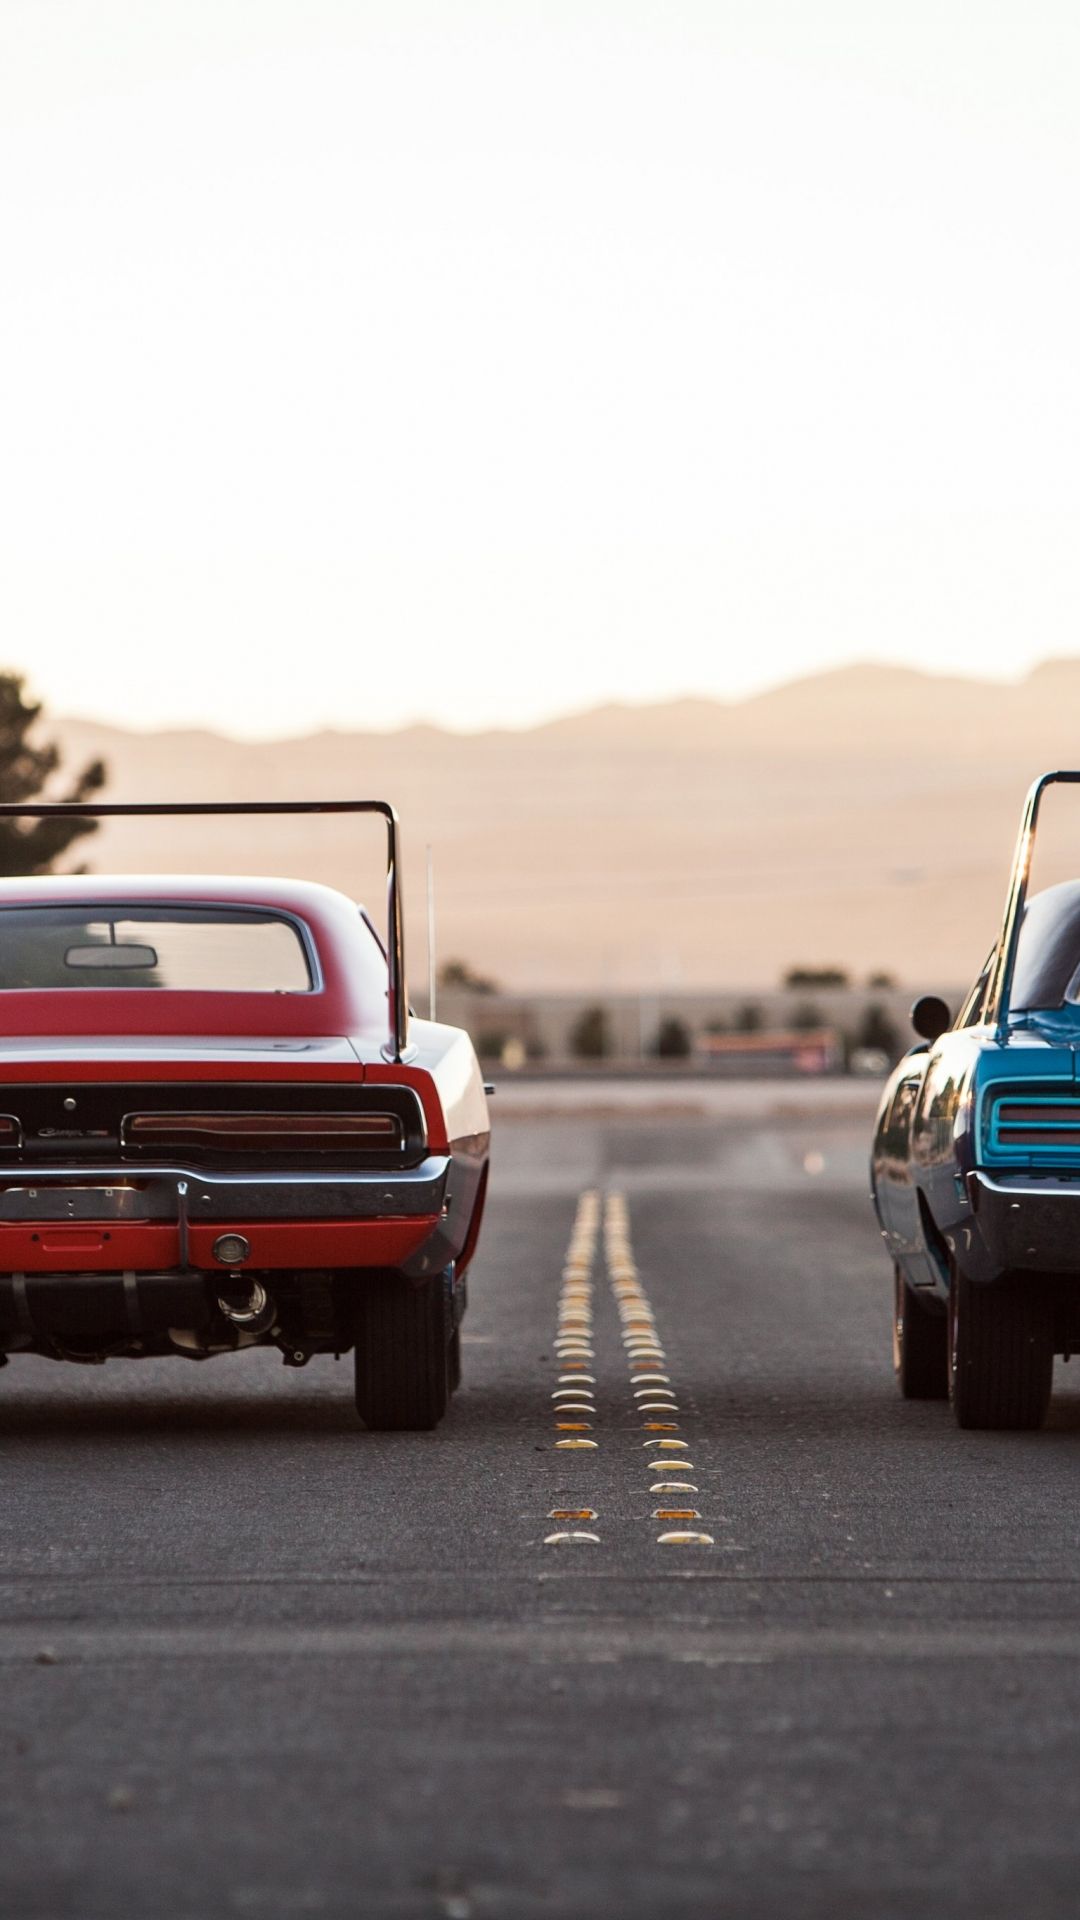 Dodge Charger Daytona Wallpapers